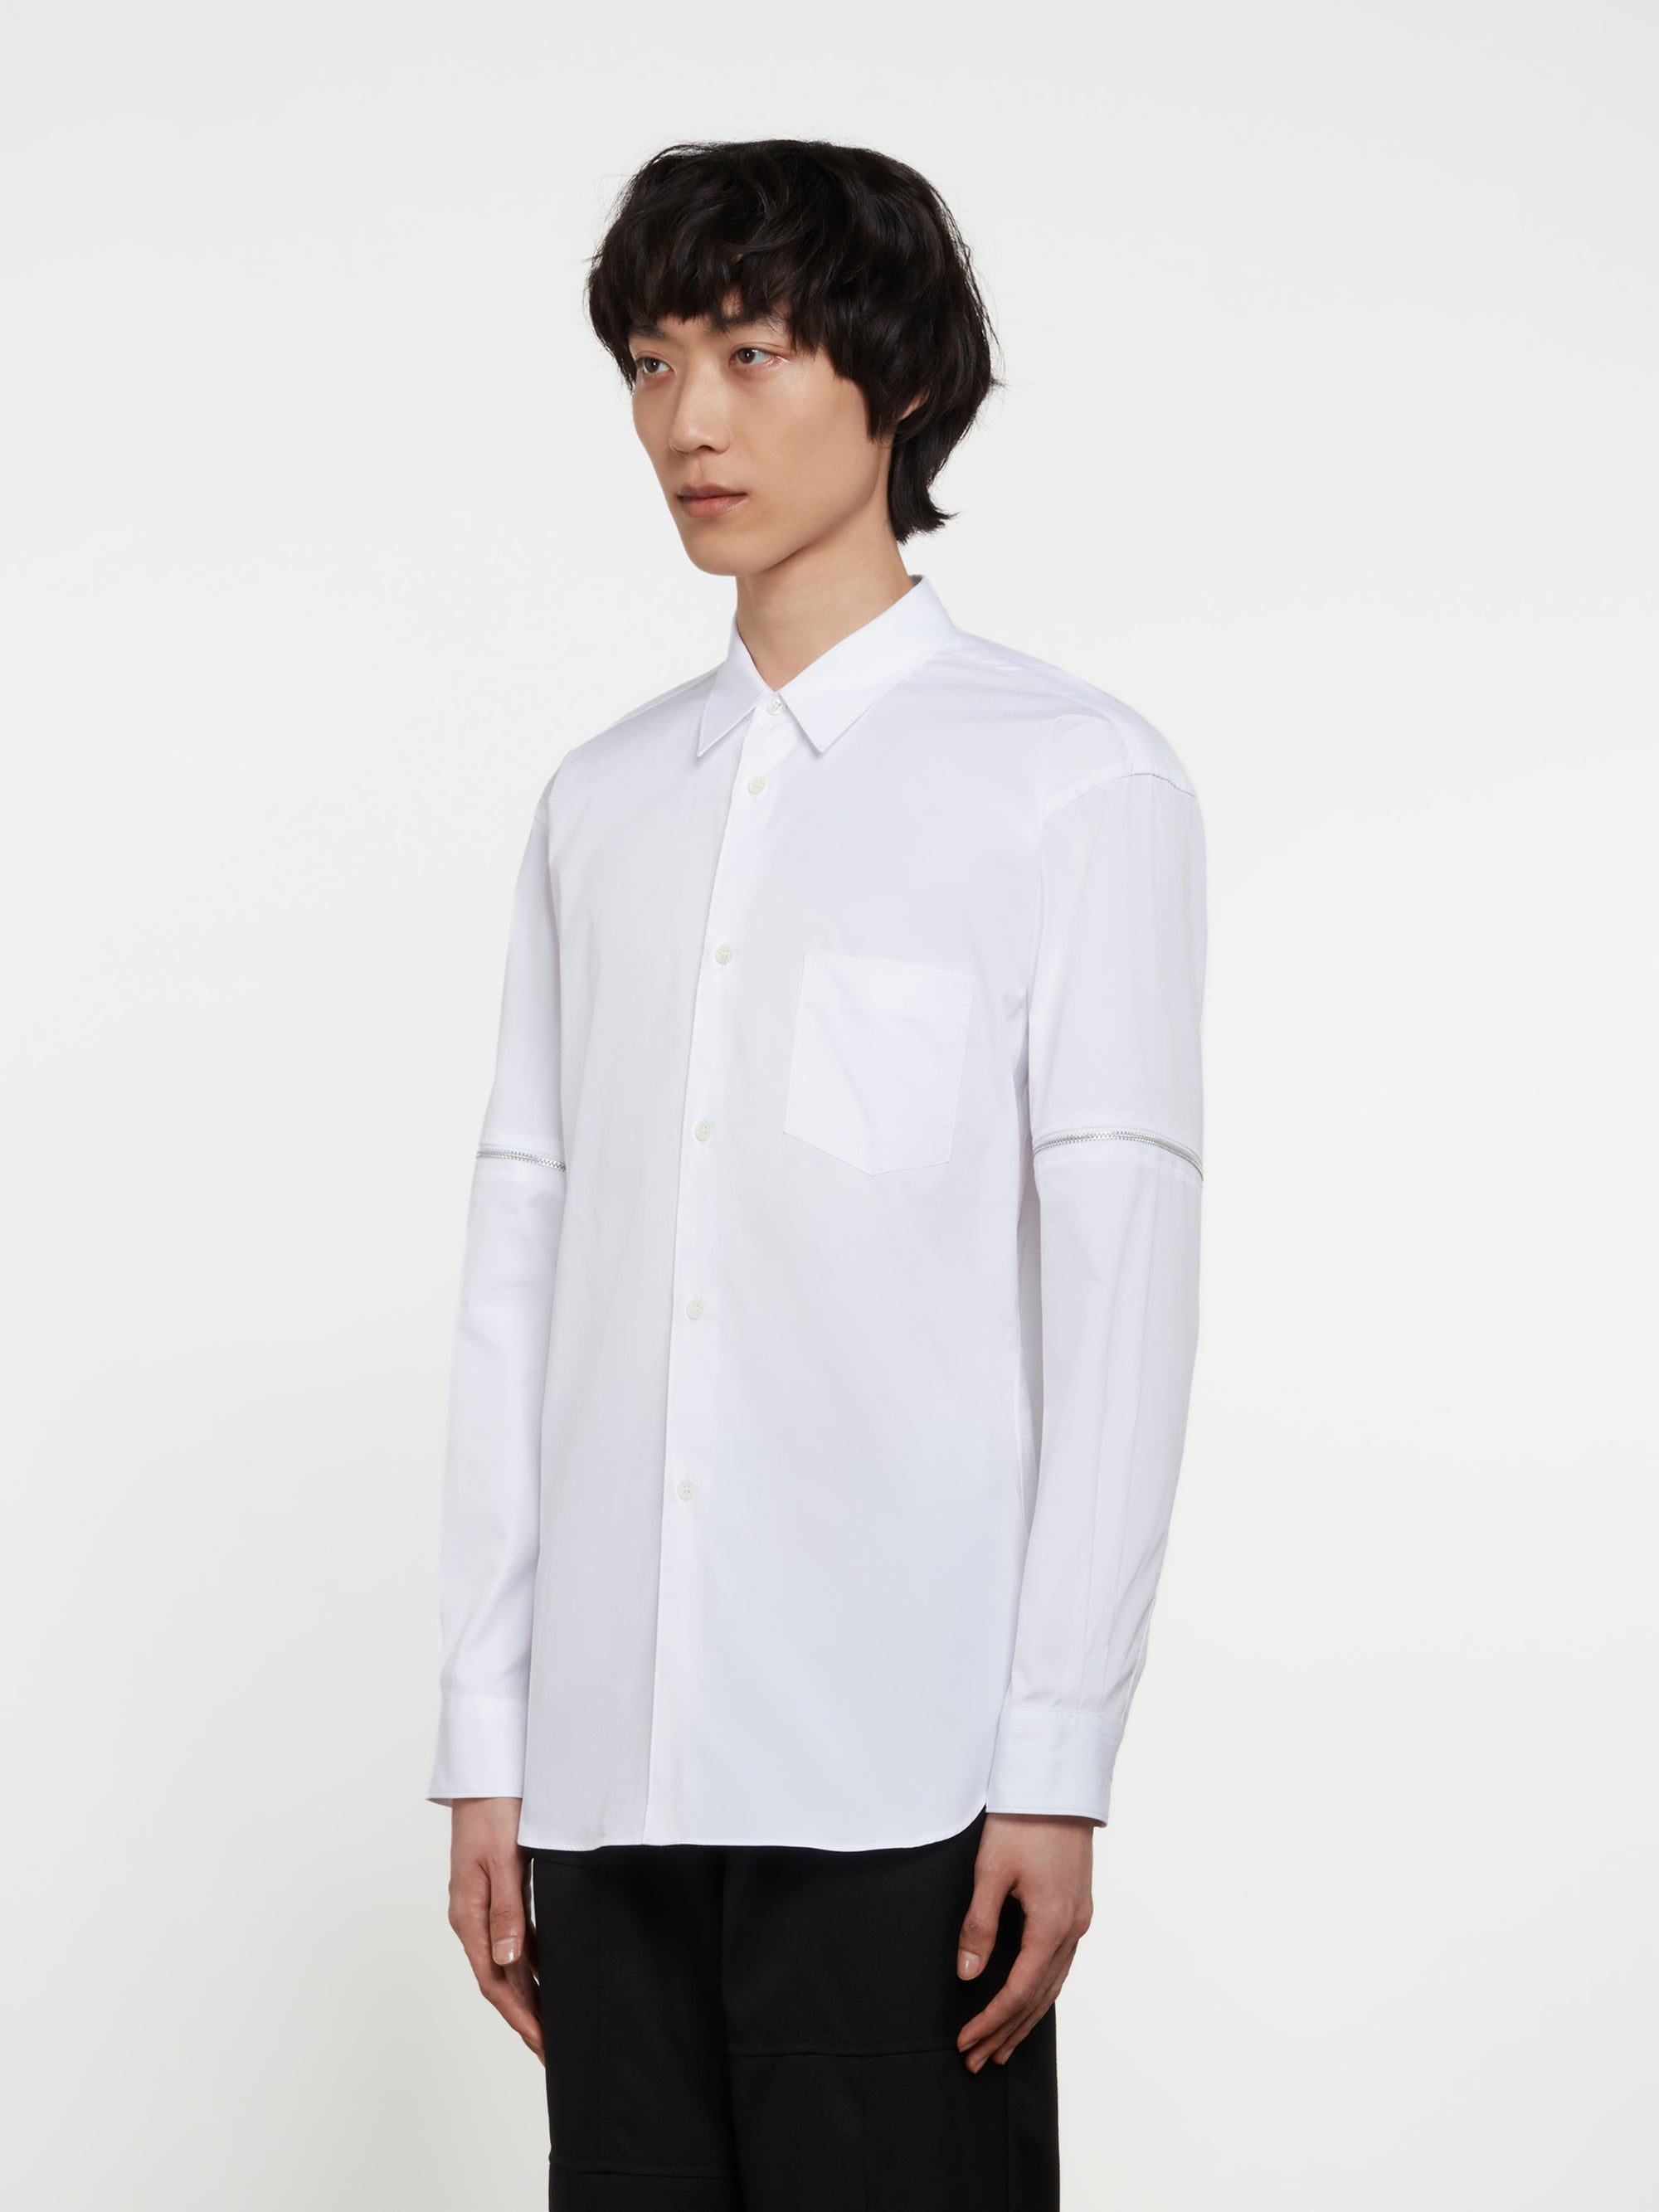 CDG Shirt - Men's Zip Off Sleeve Shirt - (White) view 2